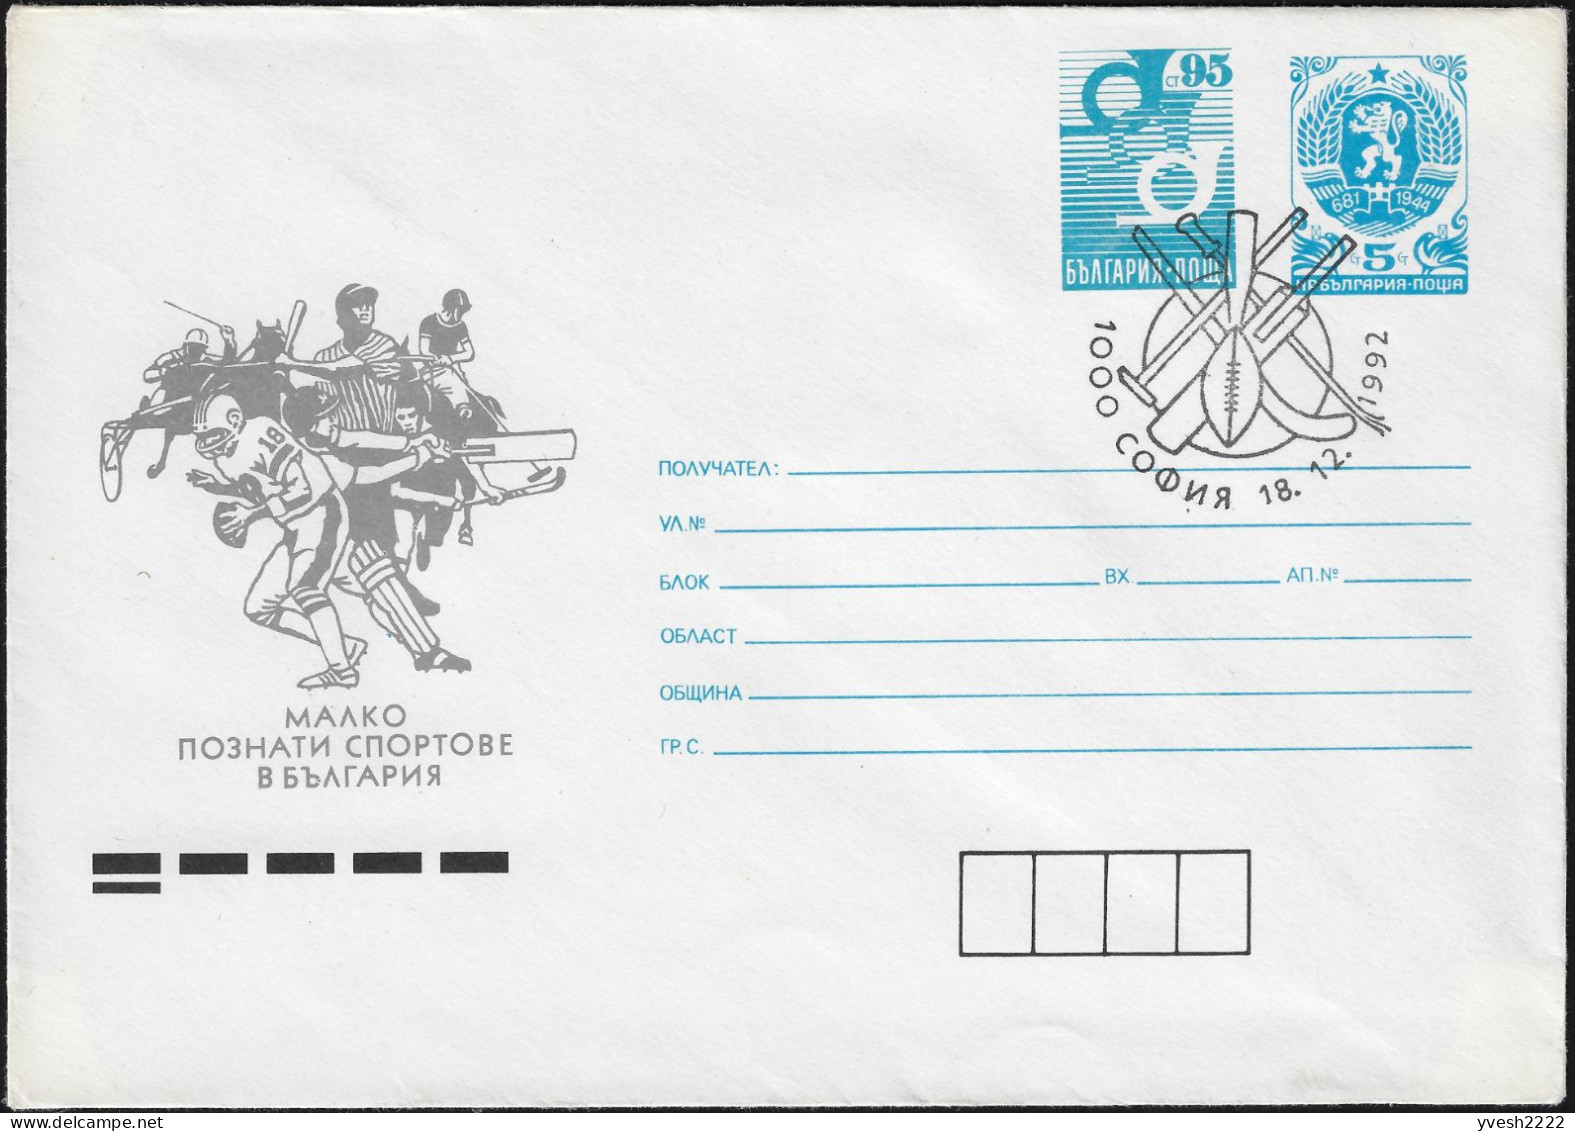 Bulgarie 1992. Entier Postal, Enveloppe. Des Sports Peu Connus Des Bulgares. Baseball, Cricket, Hockey, Hippisme (sulky) - Hockey (Veld)